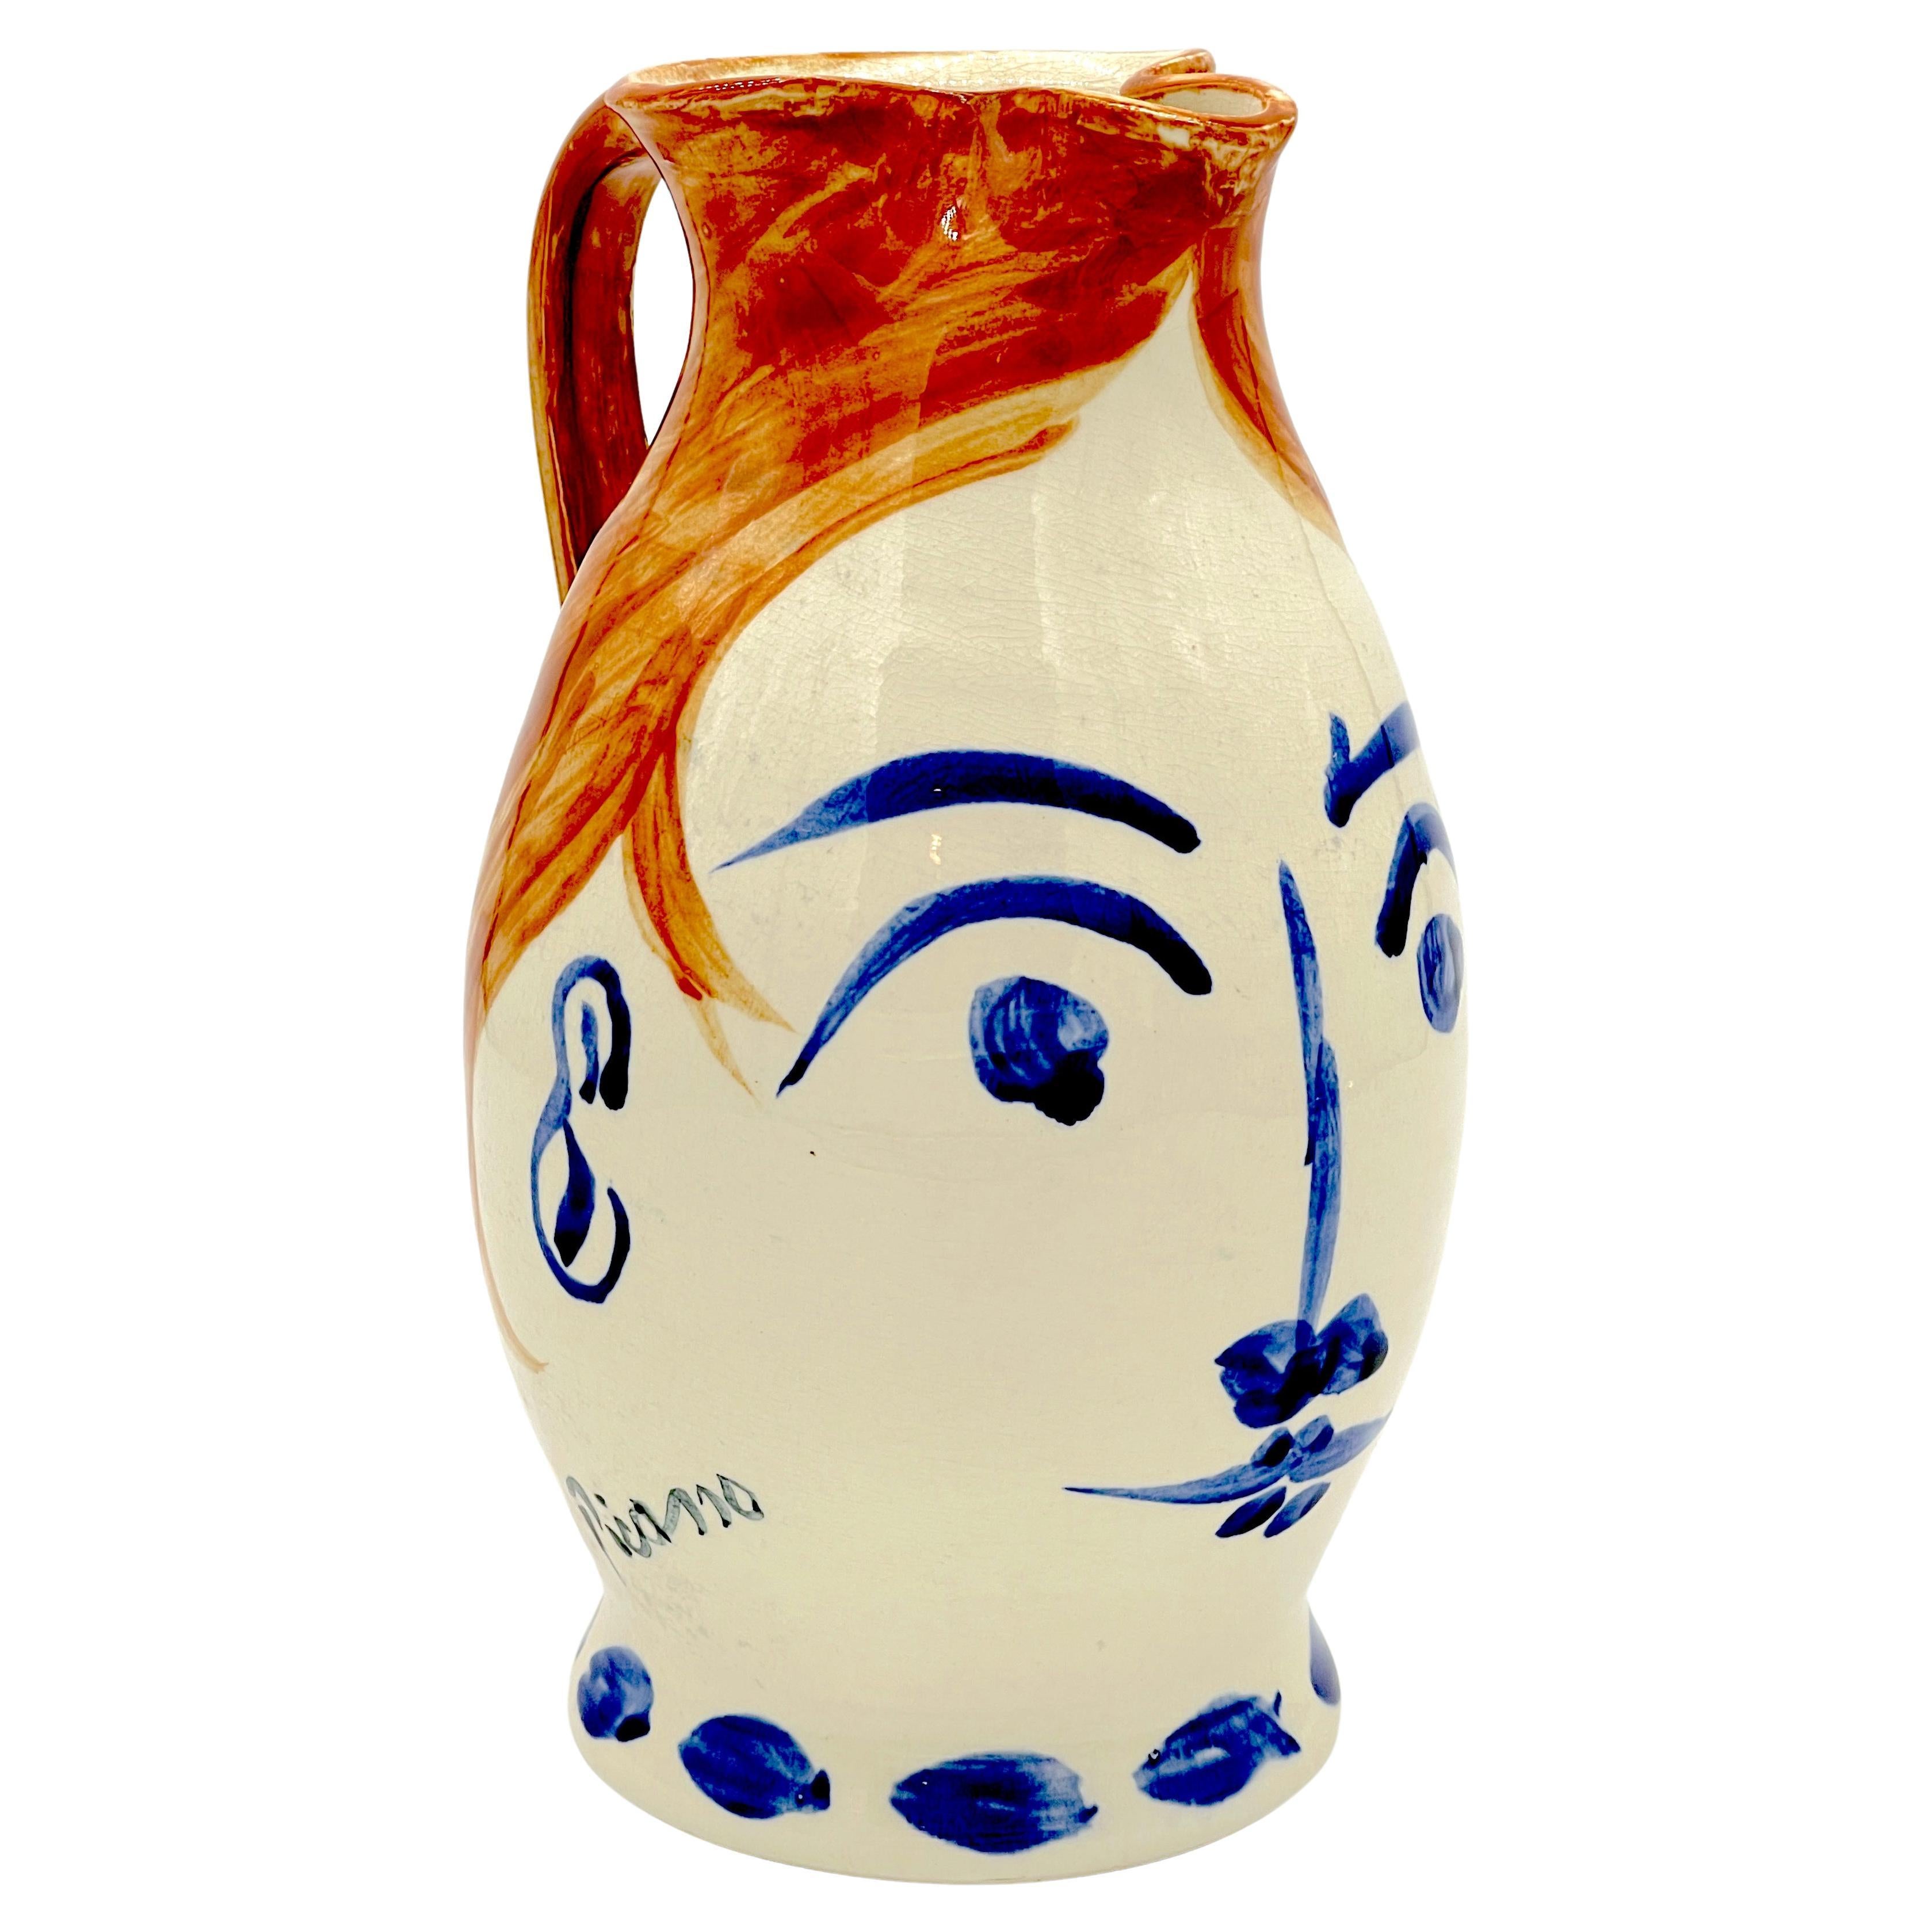 Padilla Picasso-Keramik „Chope Visage“ Krug, gestempelt